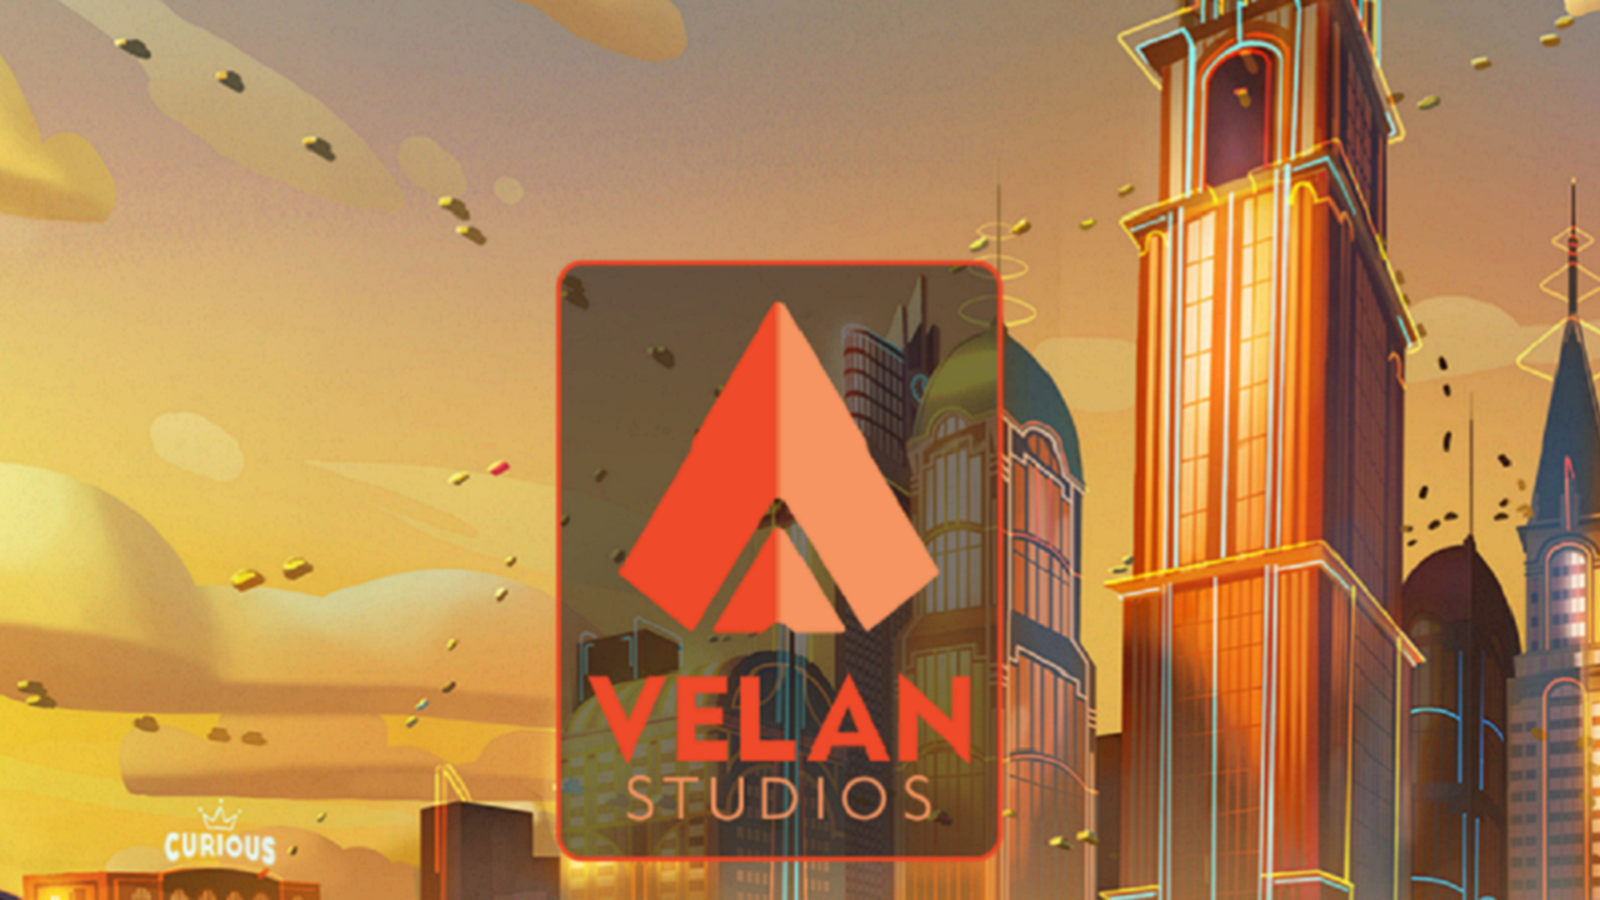 Velan Studios